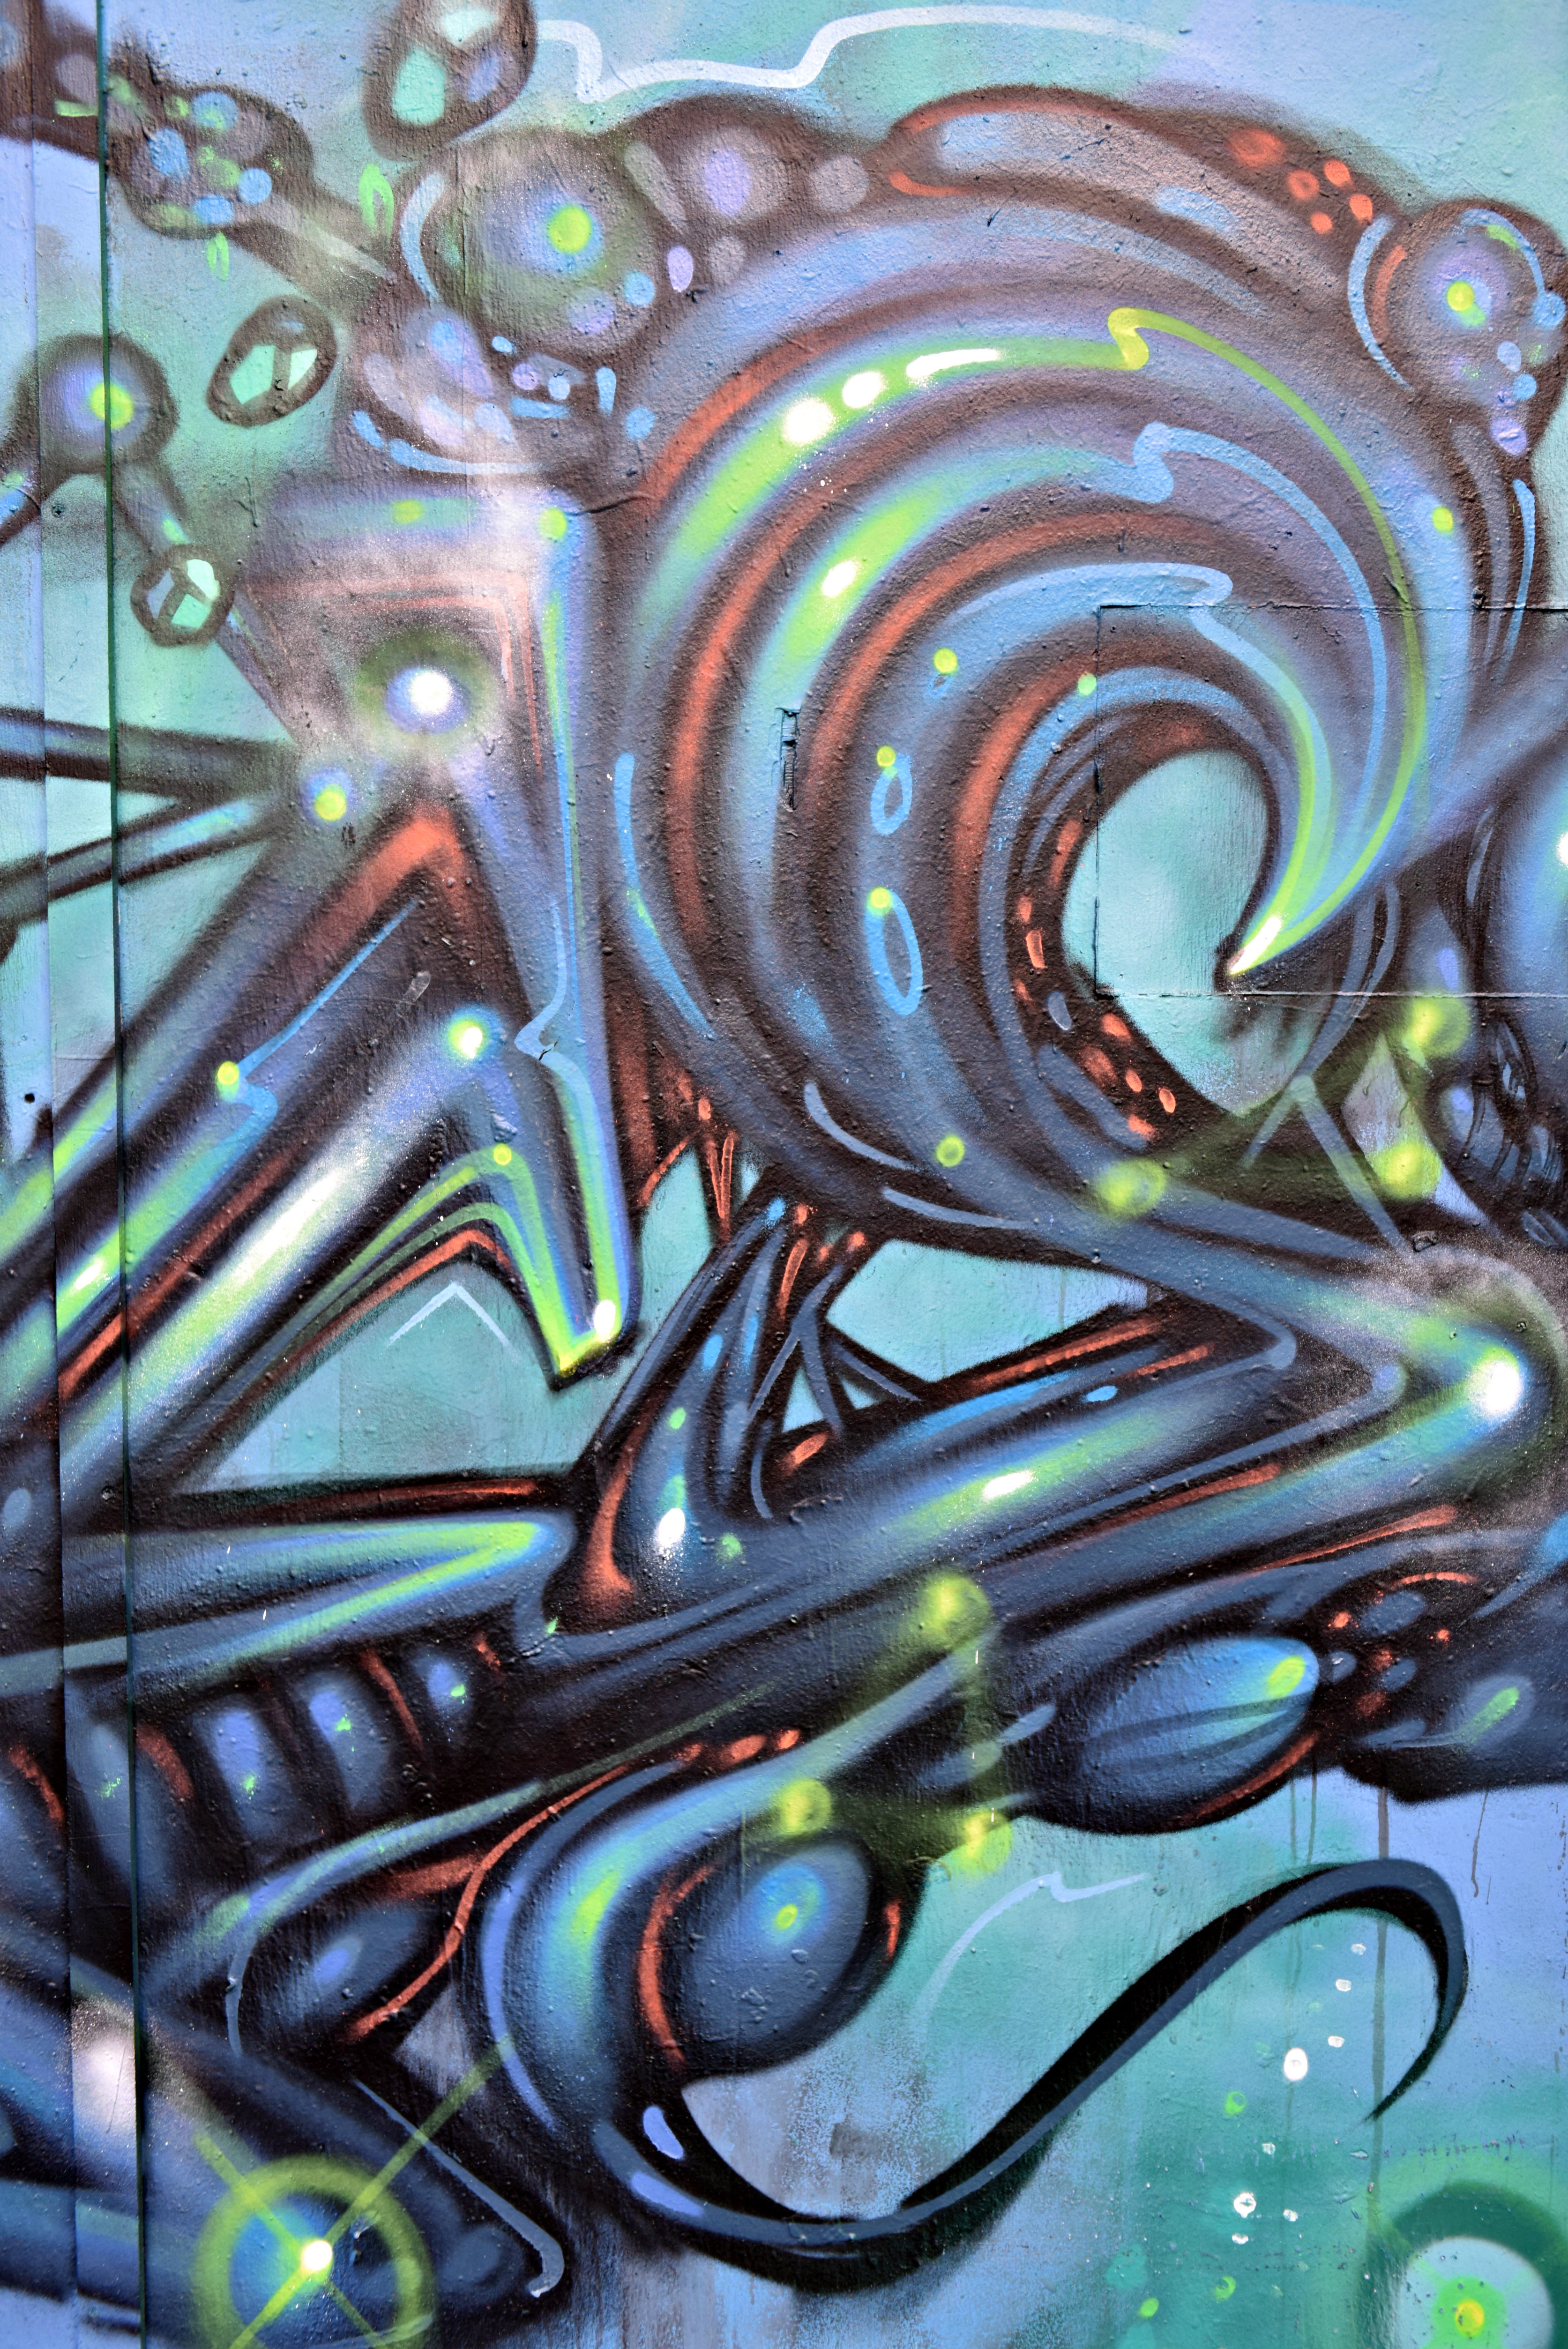 <img src="ana.jpg" alt="ana blue graffiti street art"> 